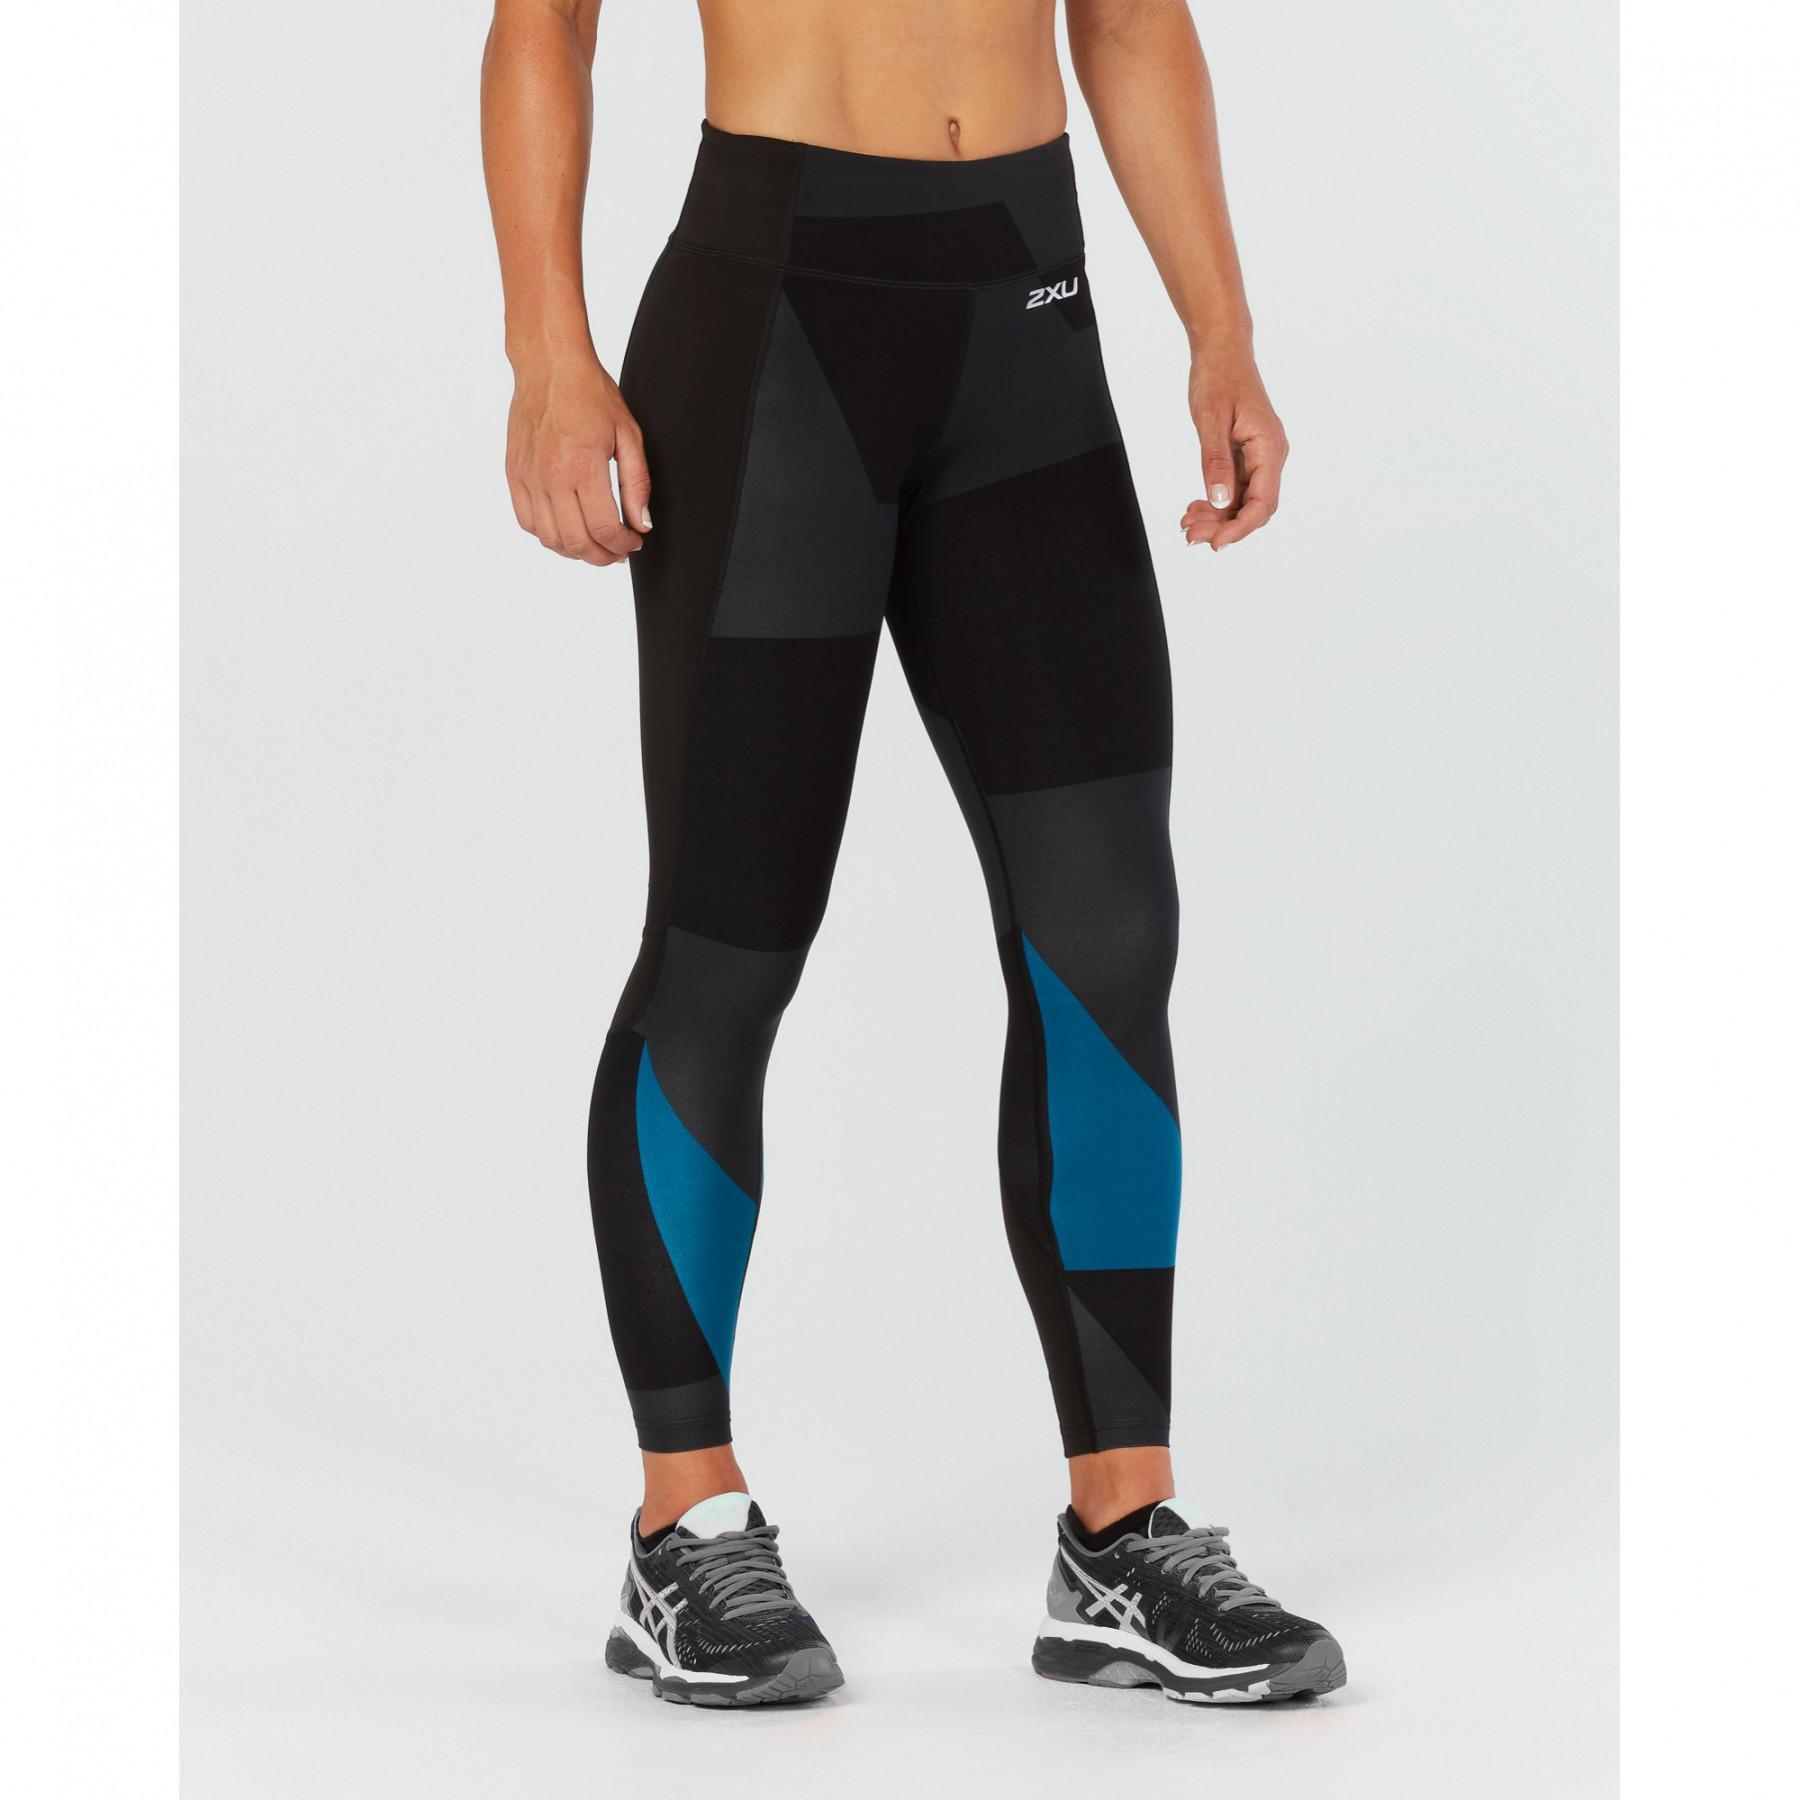 Women's compression leggings 2XU Fitness